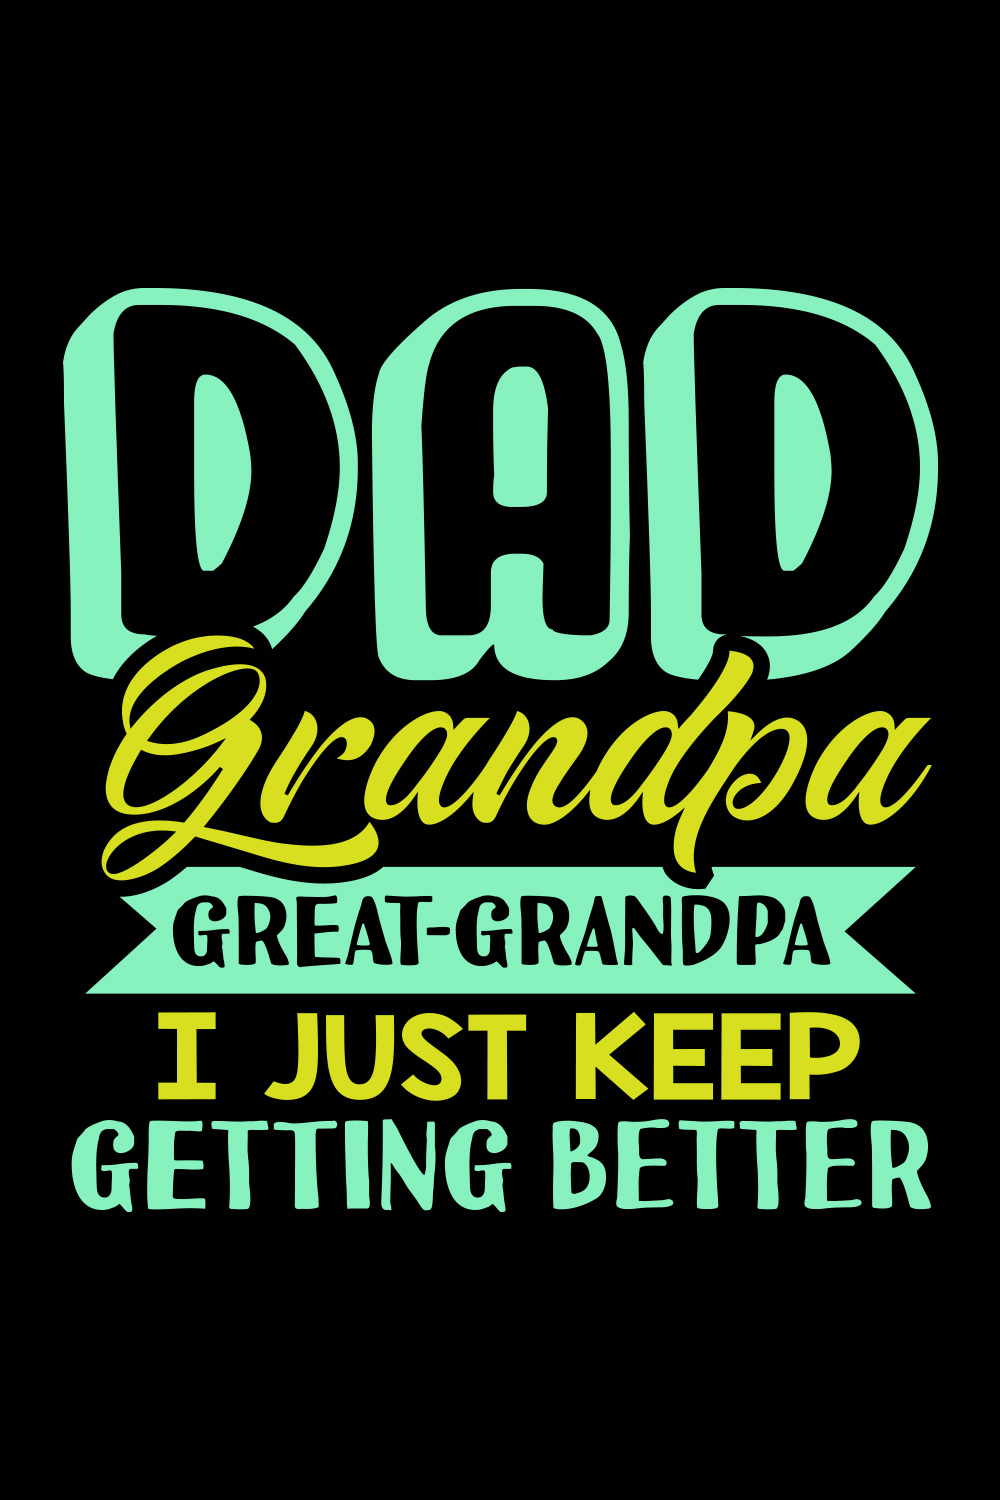 Dad Grandpa Great Grandpa T-shirt Design pinterest image.